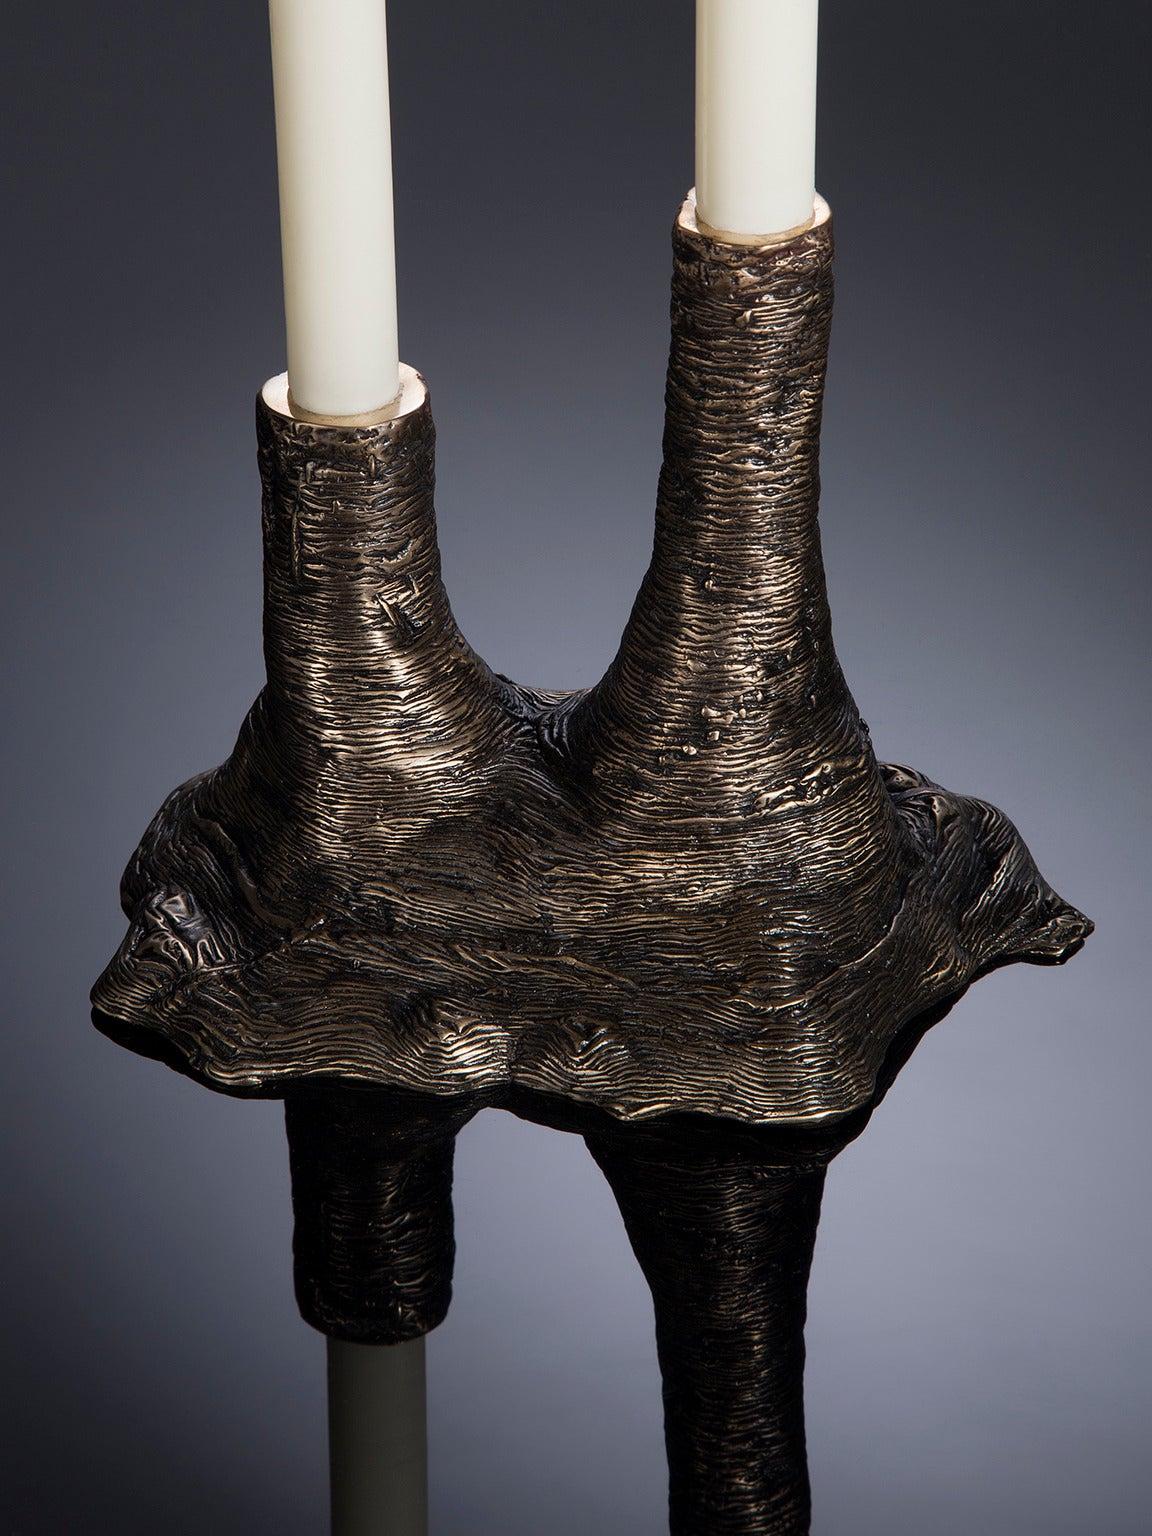 American Ice-Cast Bronze Double Candleholder by Steven Haulenbeek For Sale